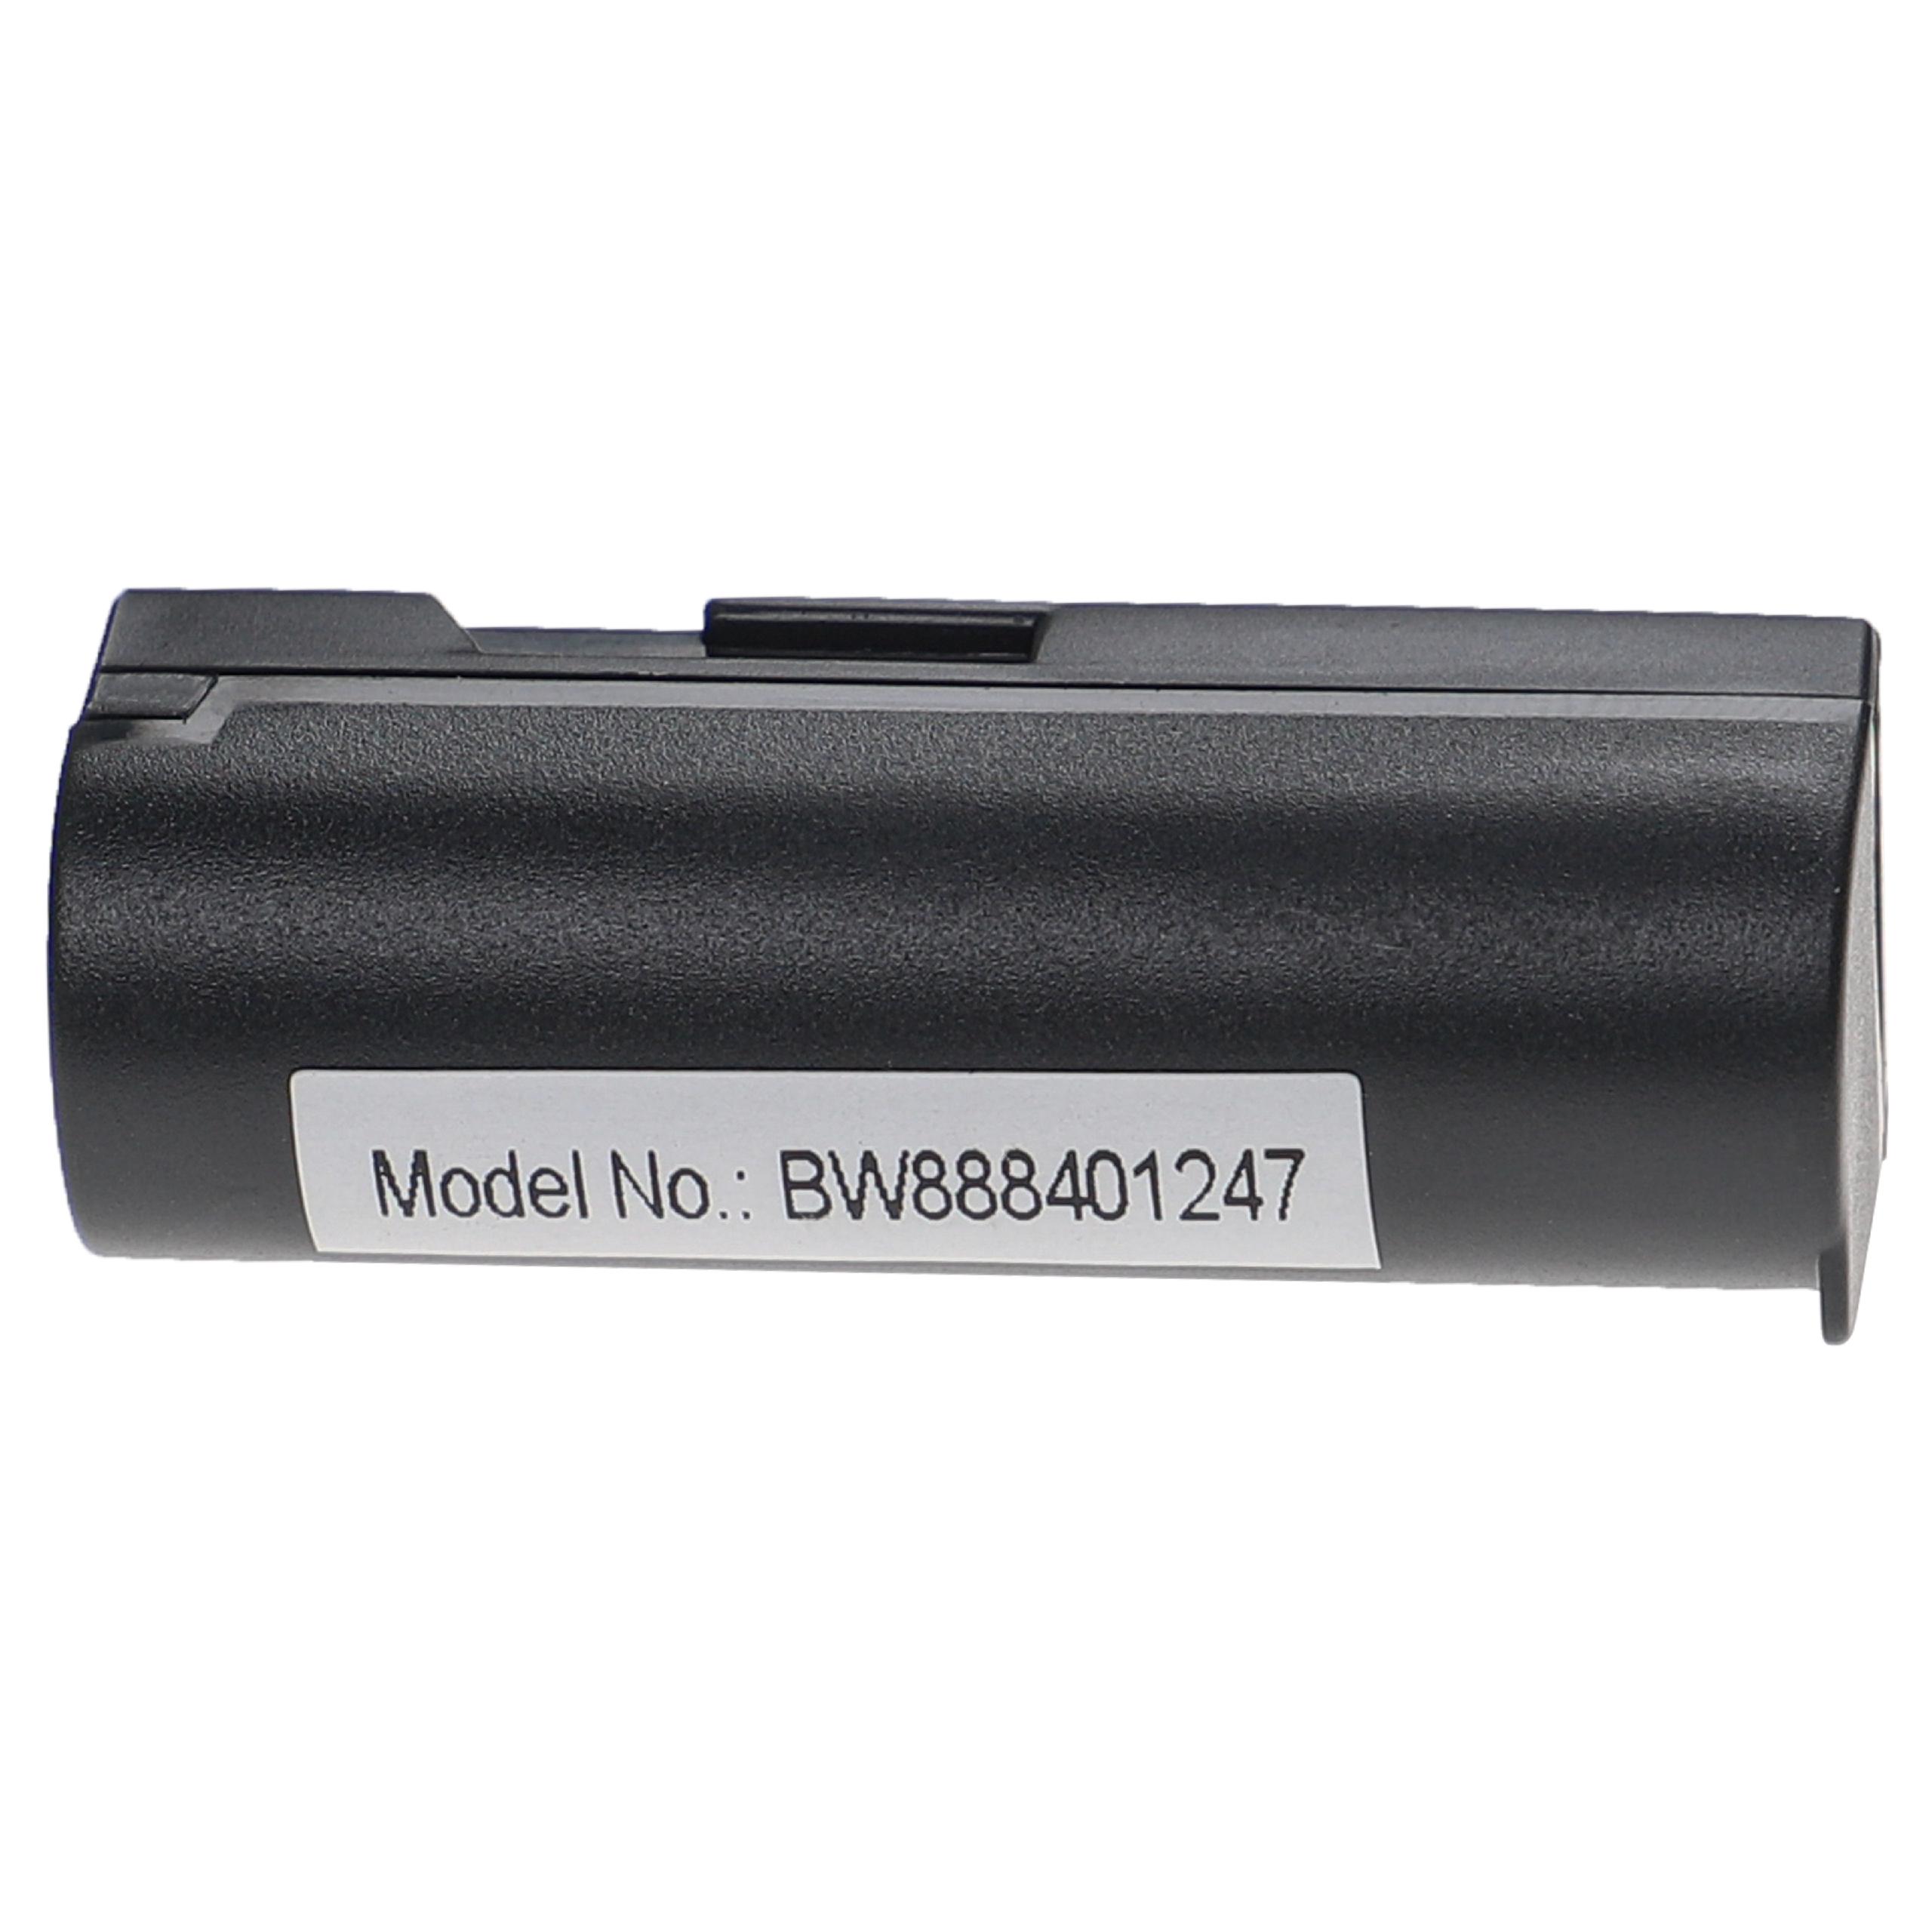 2x Akumulator do aparatu cyfrowego zamiennik Konica Minolta NP-700 - 700 mAh 3,7 V Li-Ion